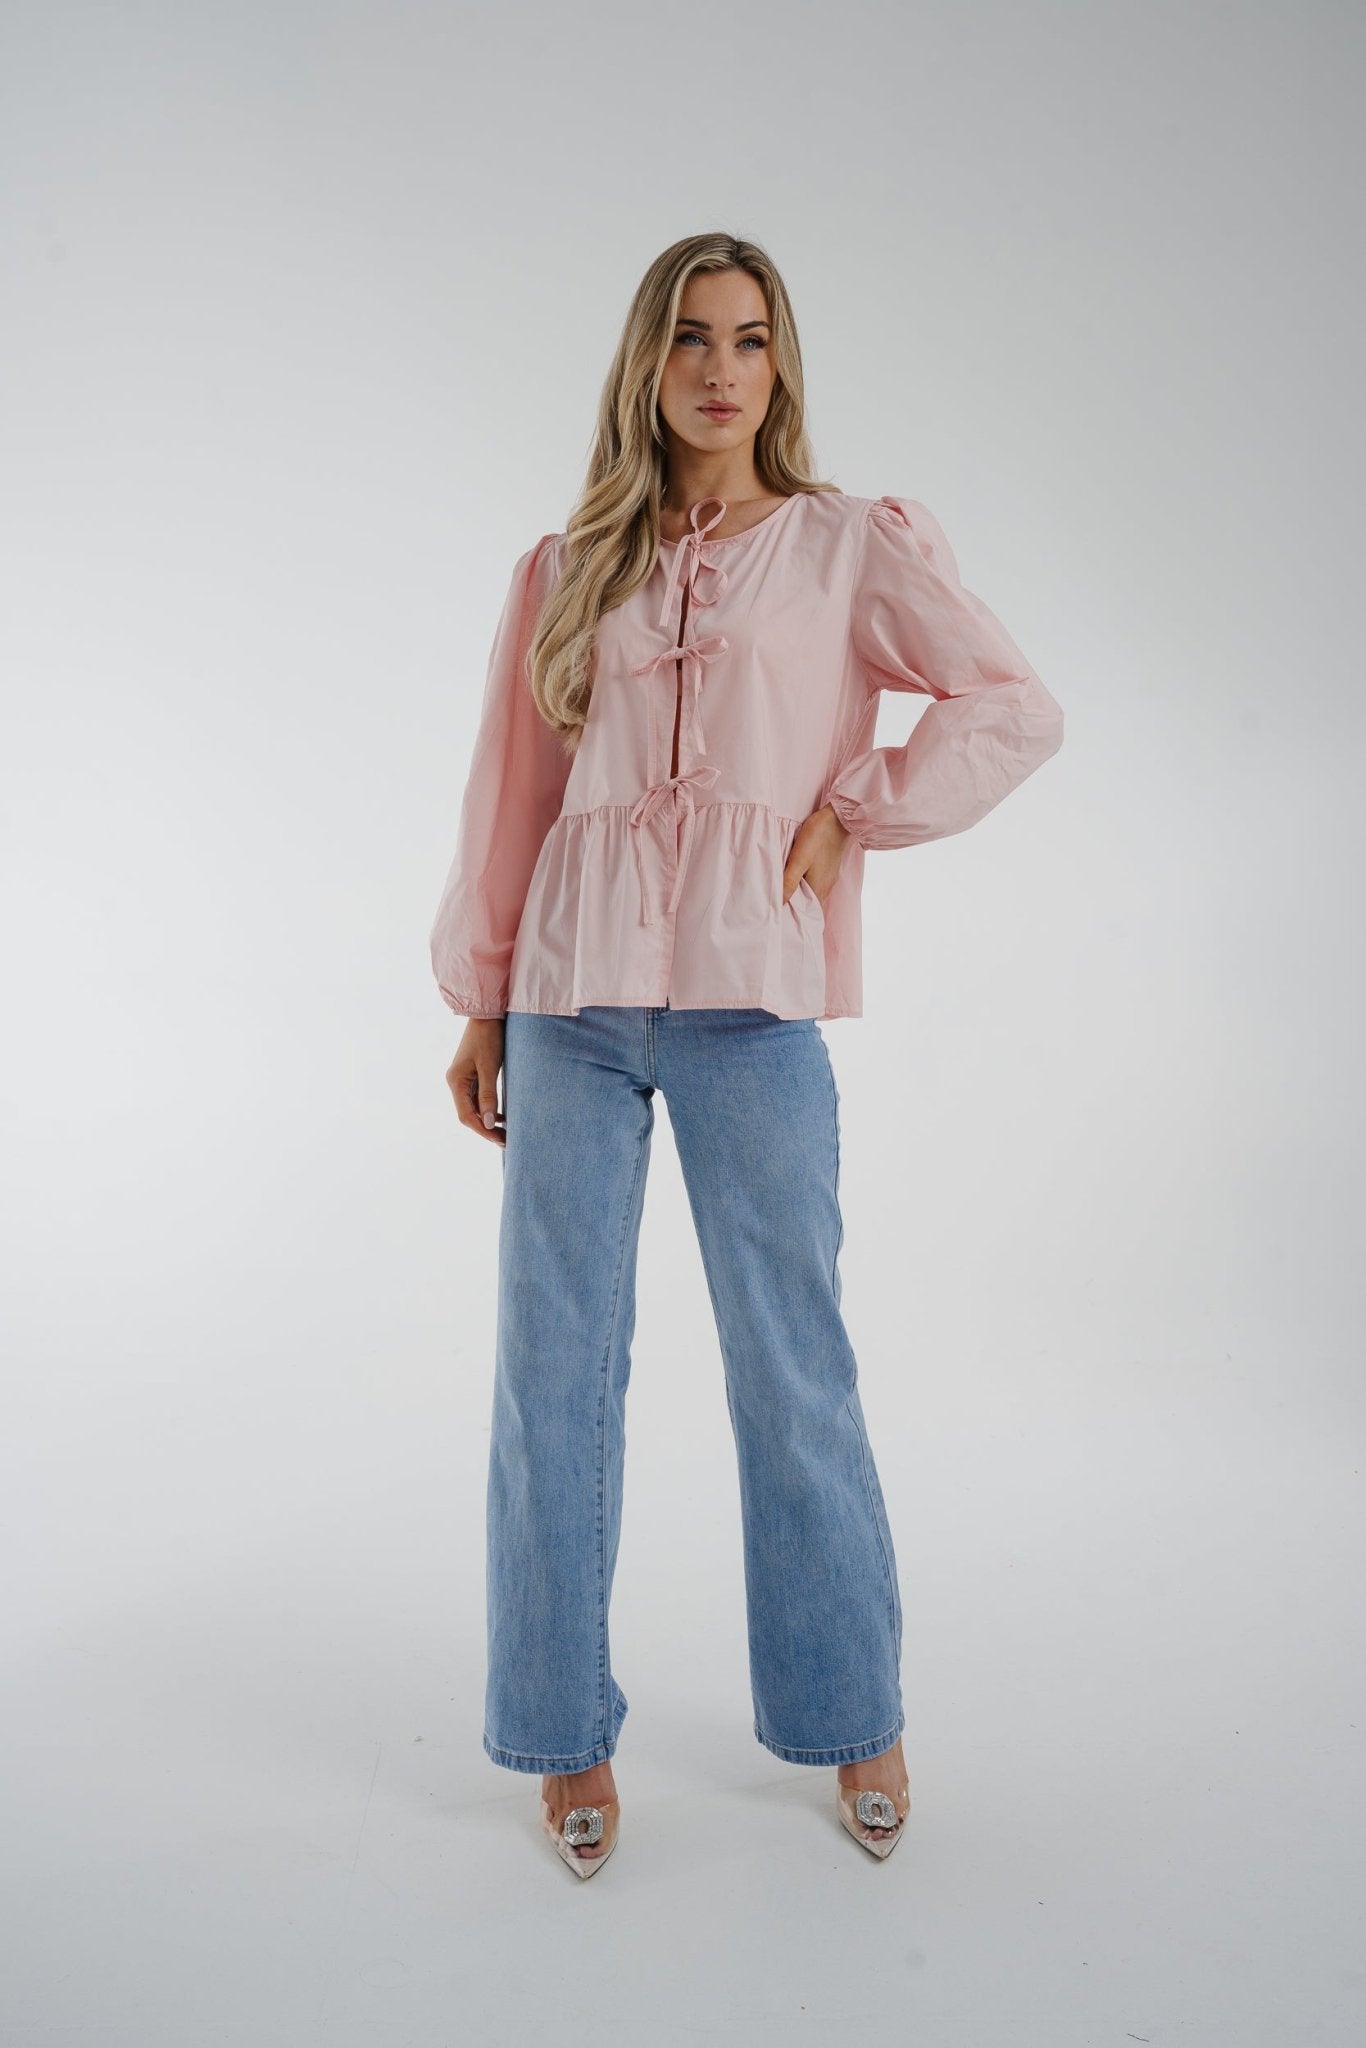 Poppy Bow Detail Blouse In Pink - The Walk in Wardrobe